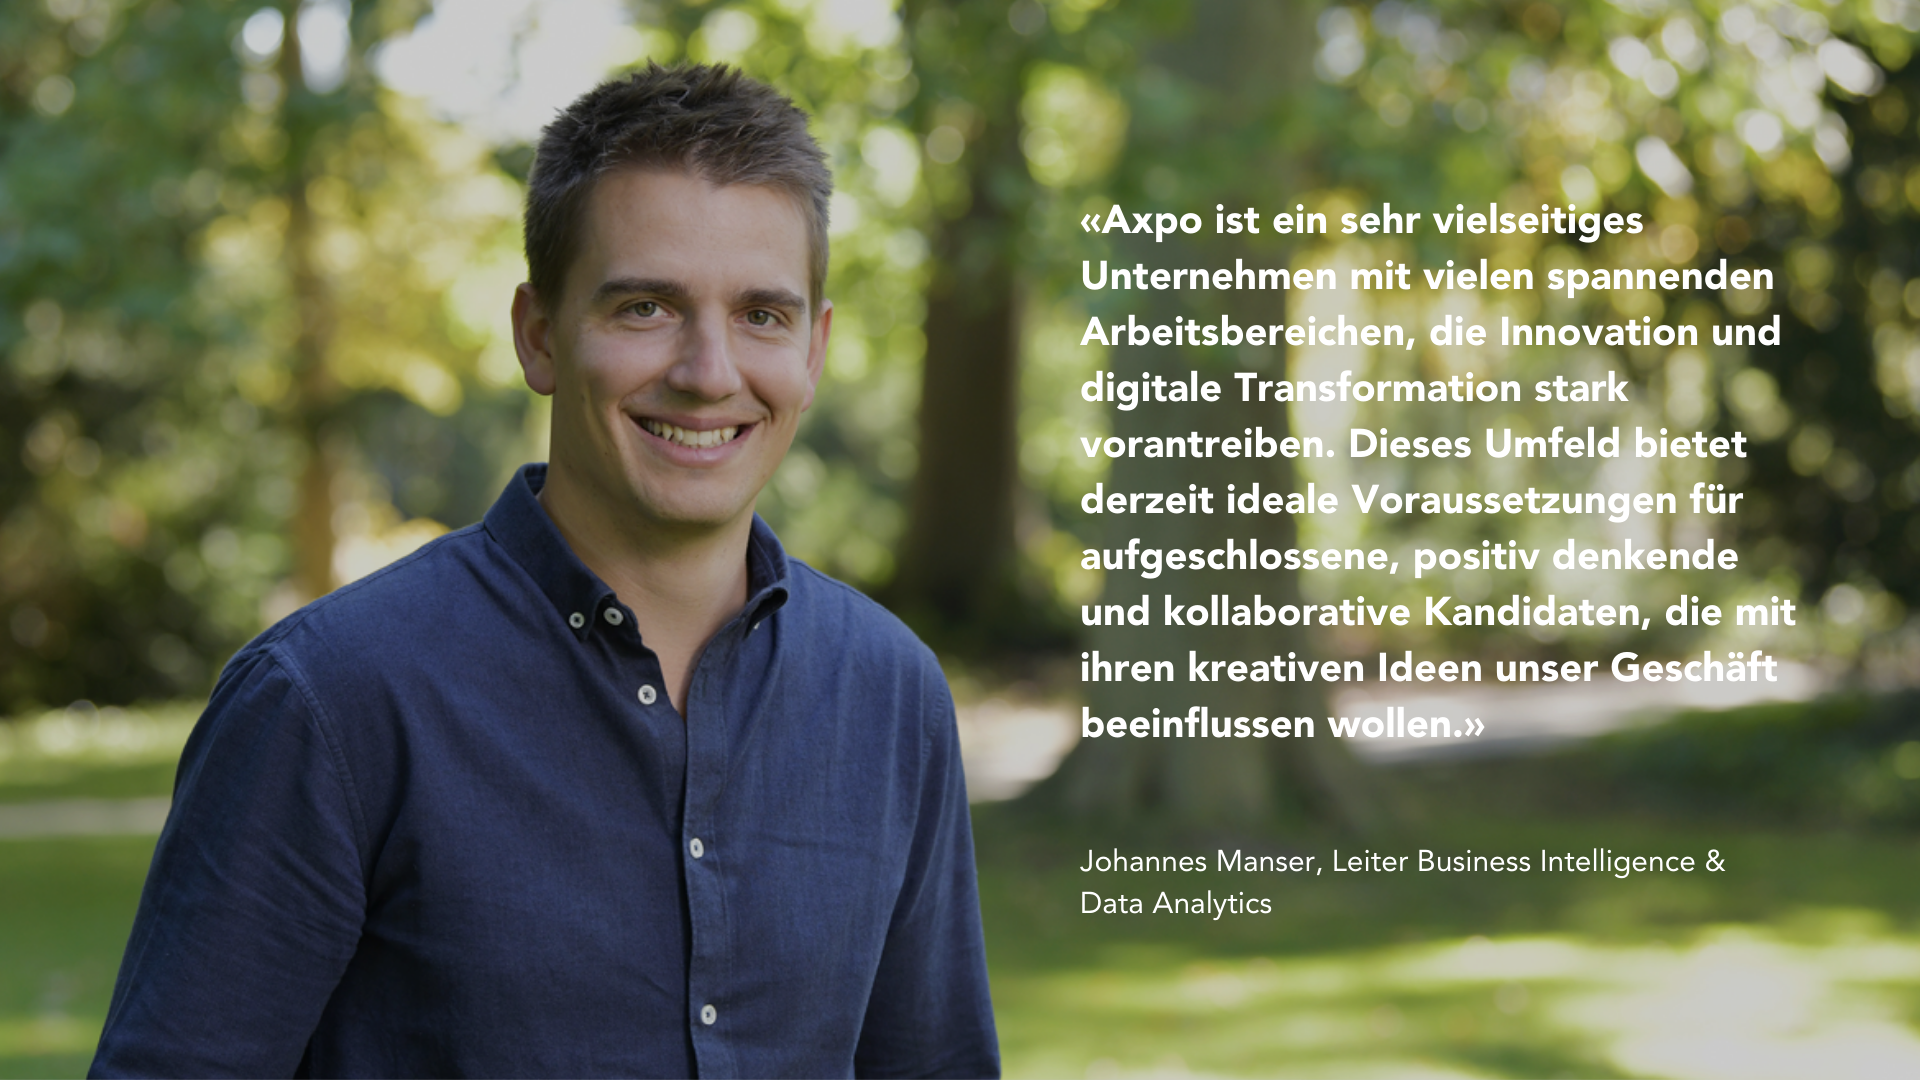 Johannes Manser, Head Business Intelligence & Data Analytics